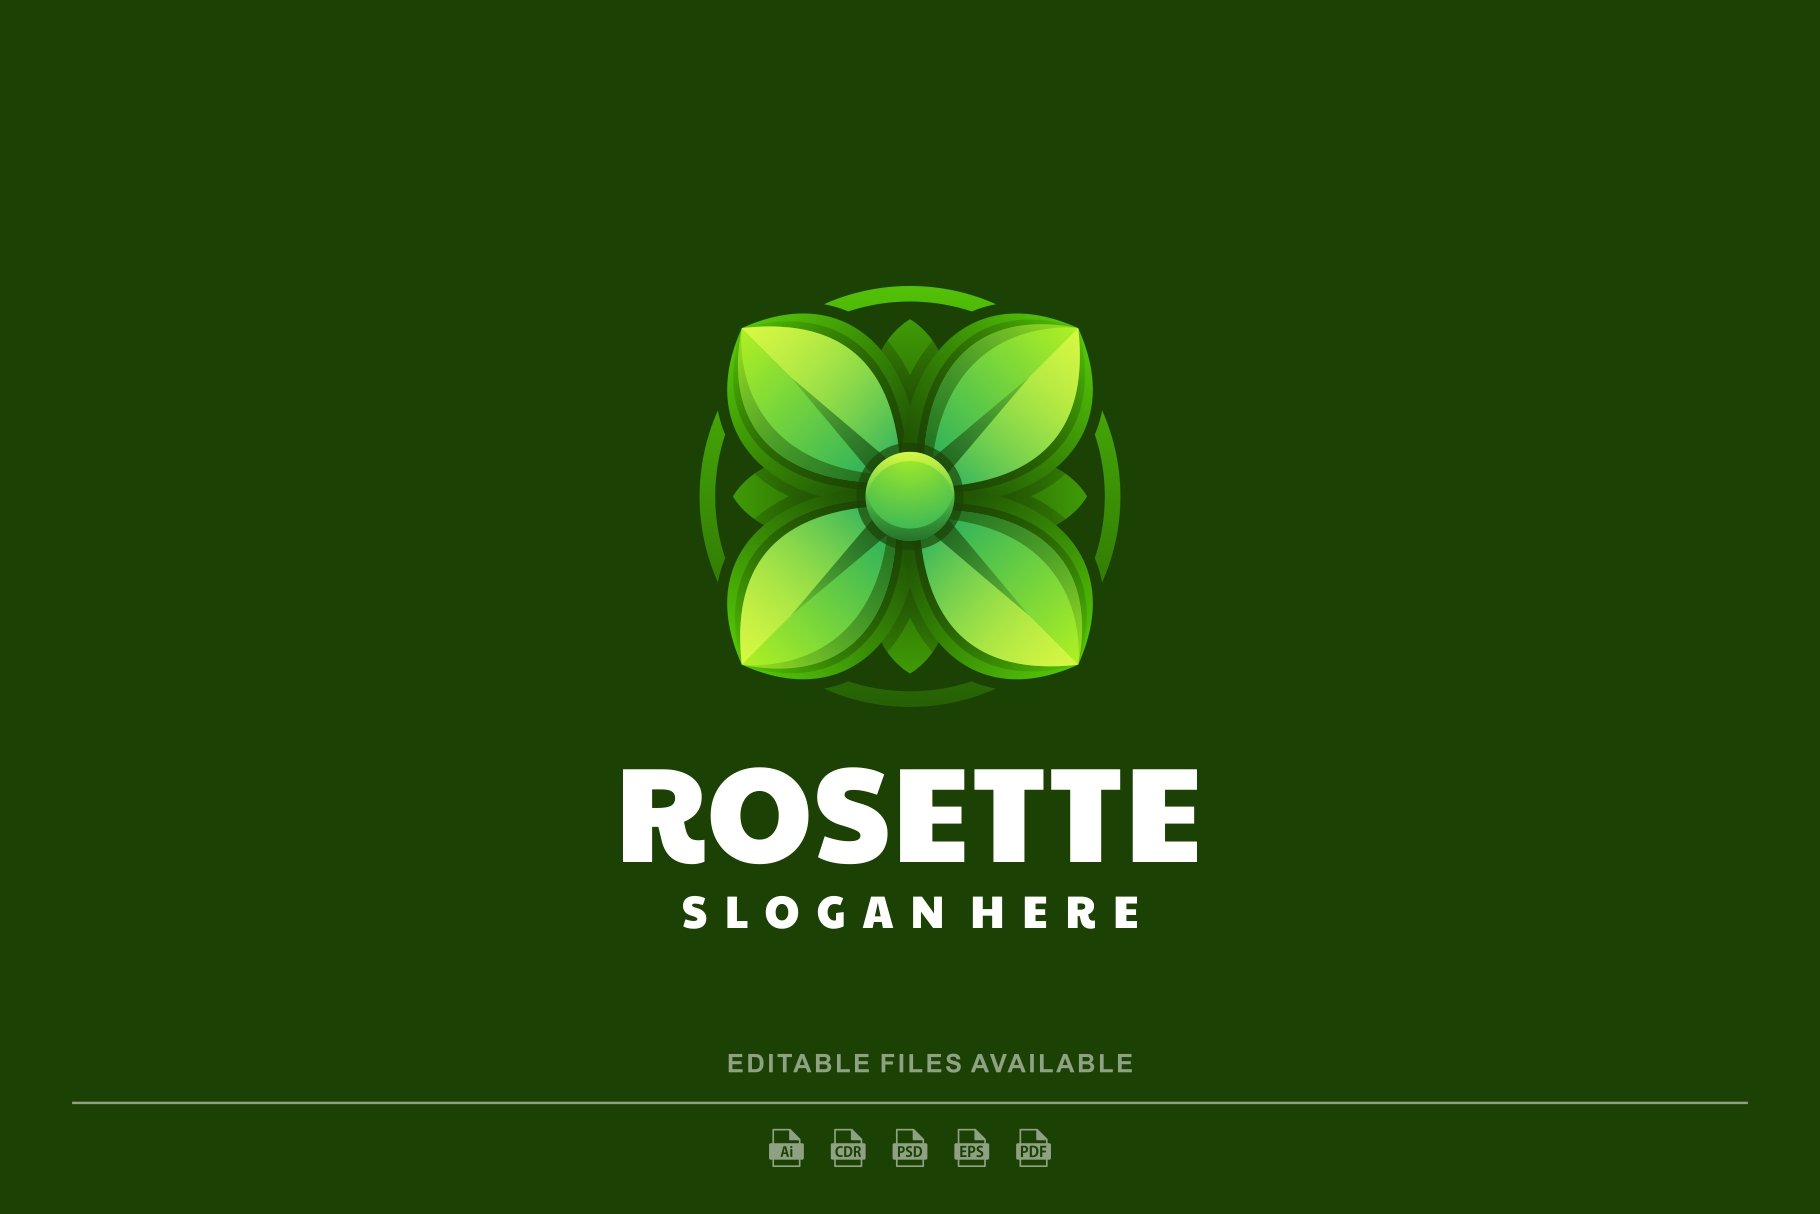 Rossete Gradient Logo cover image.